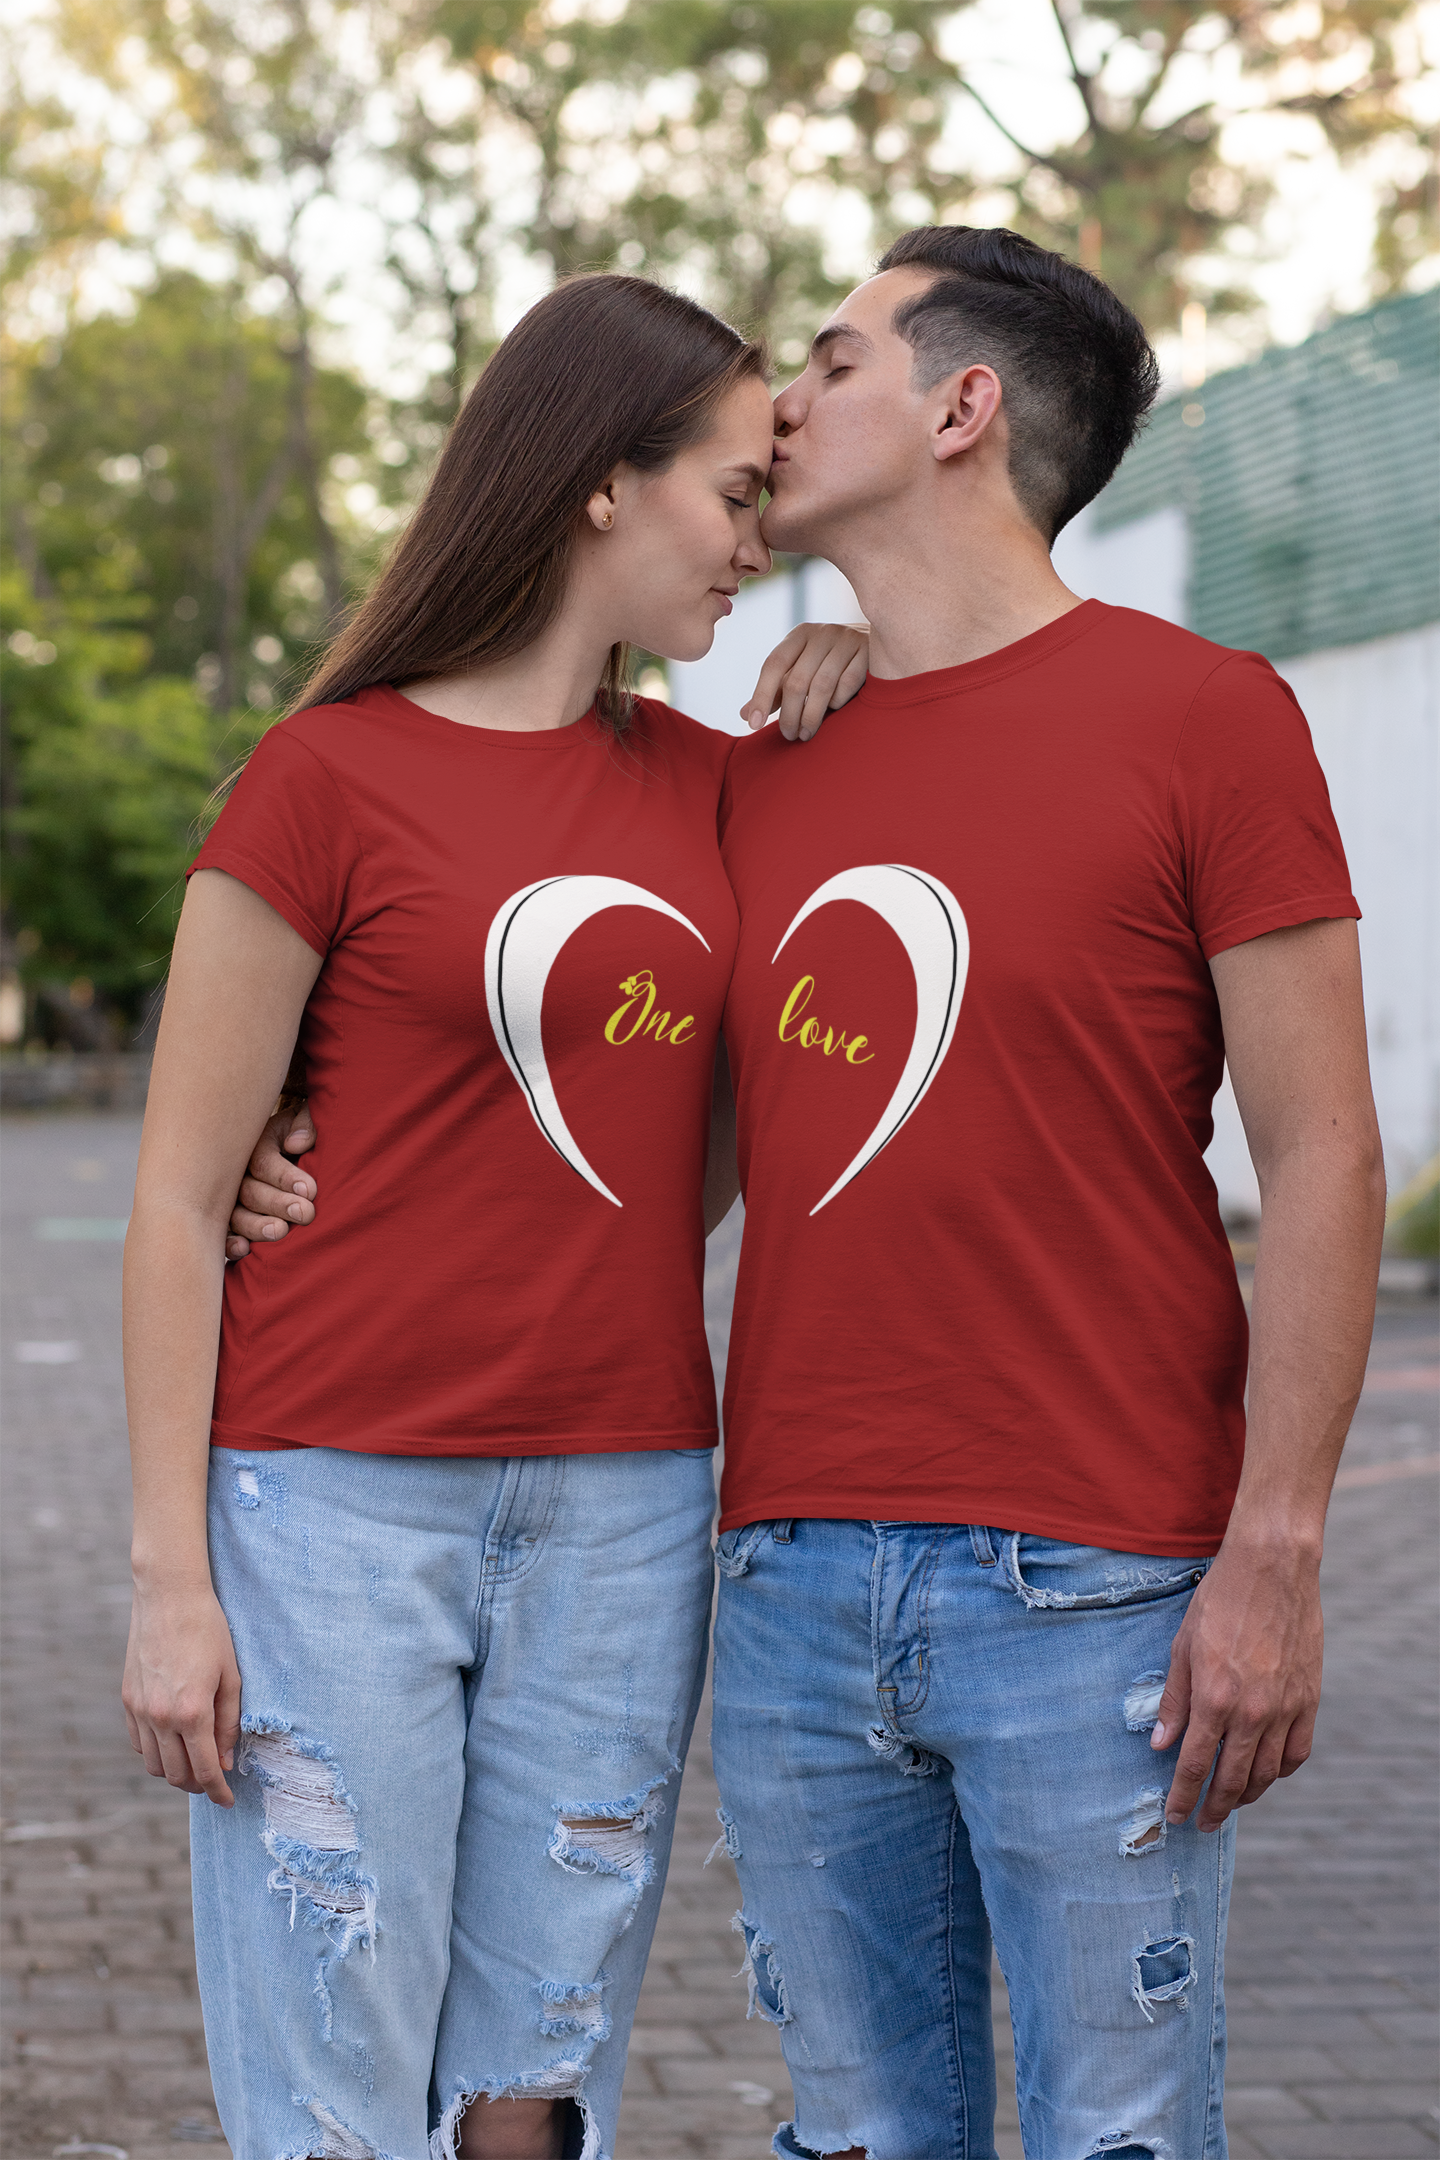 One Love Couple Half Sleeves T-Shirts -FunkyTeesClub